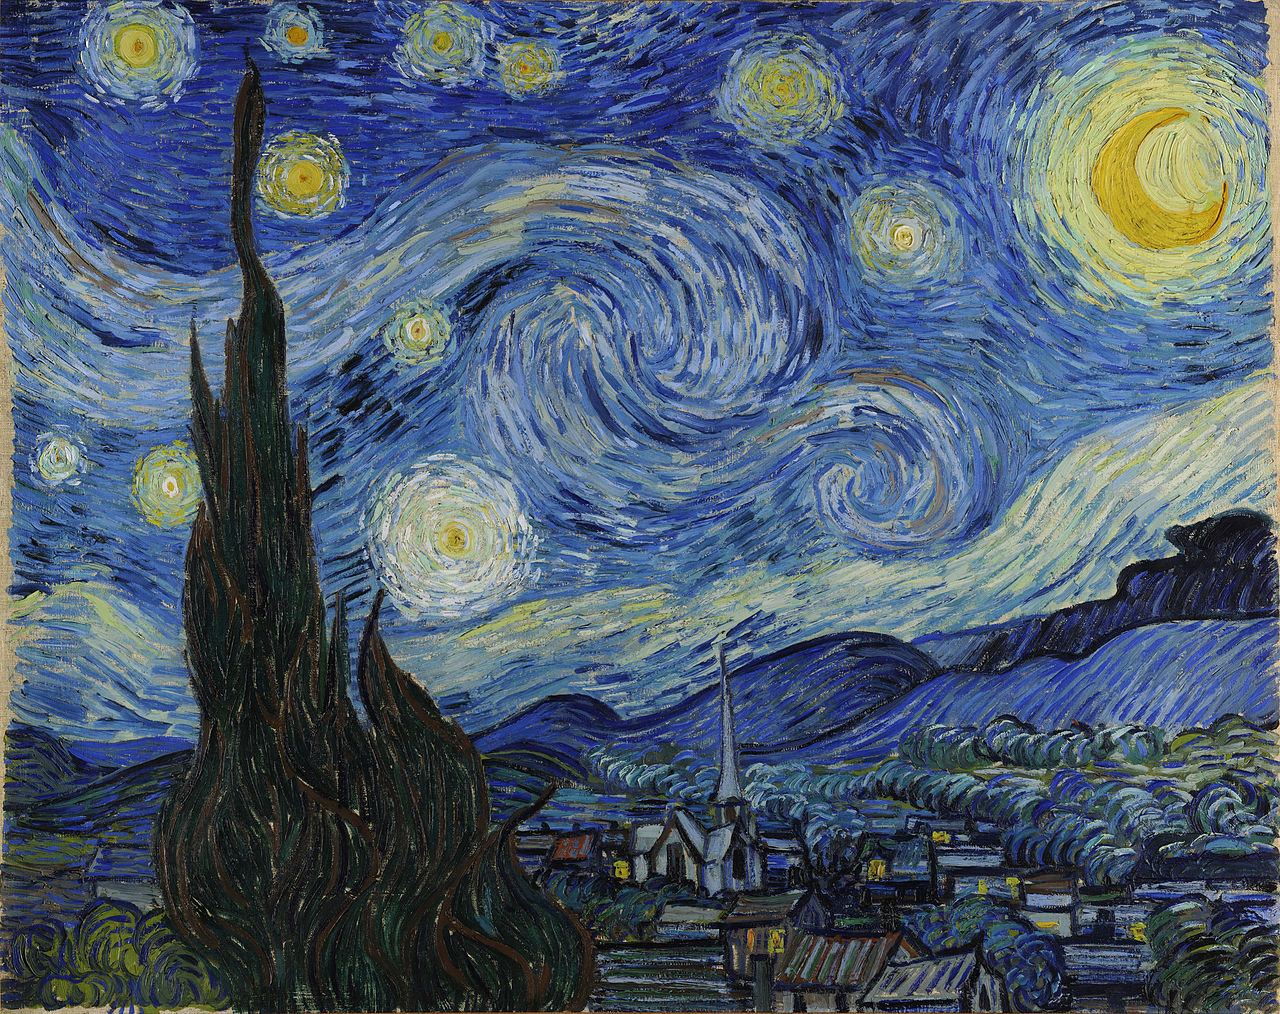 Notte stellata by Vincent van Gogh - 1889 - 73,7  × 92,1 cm Museum of Modern Art